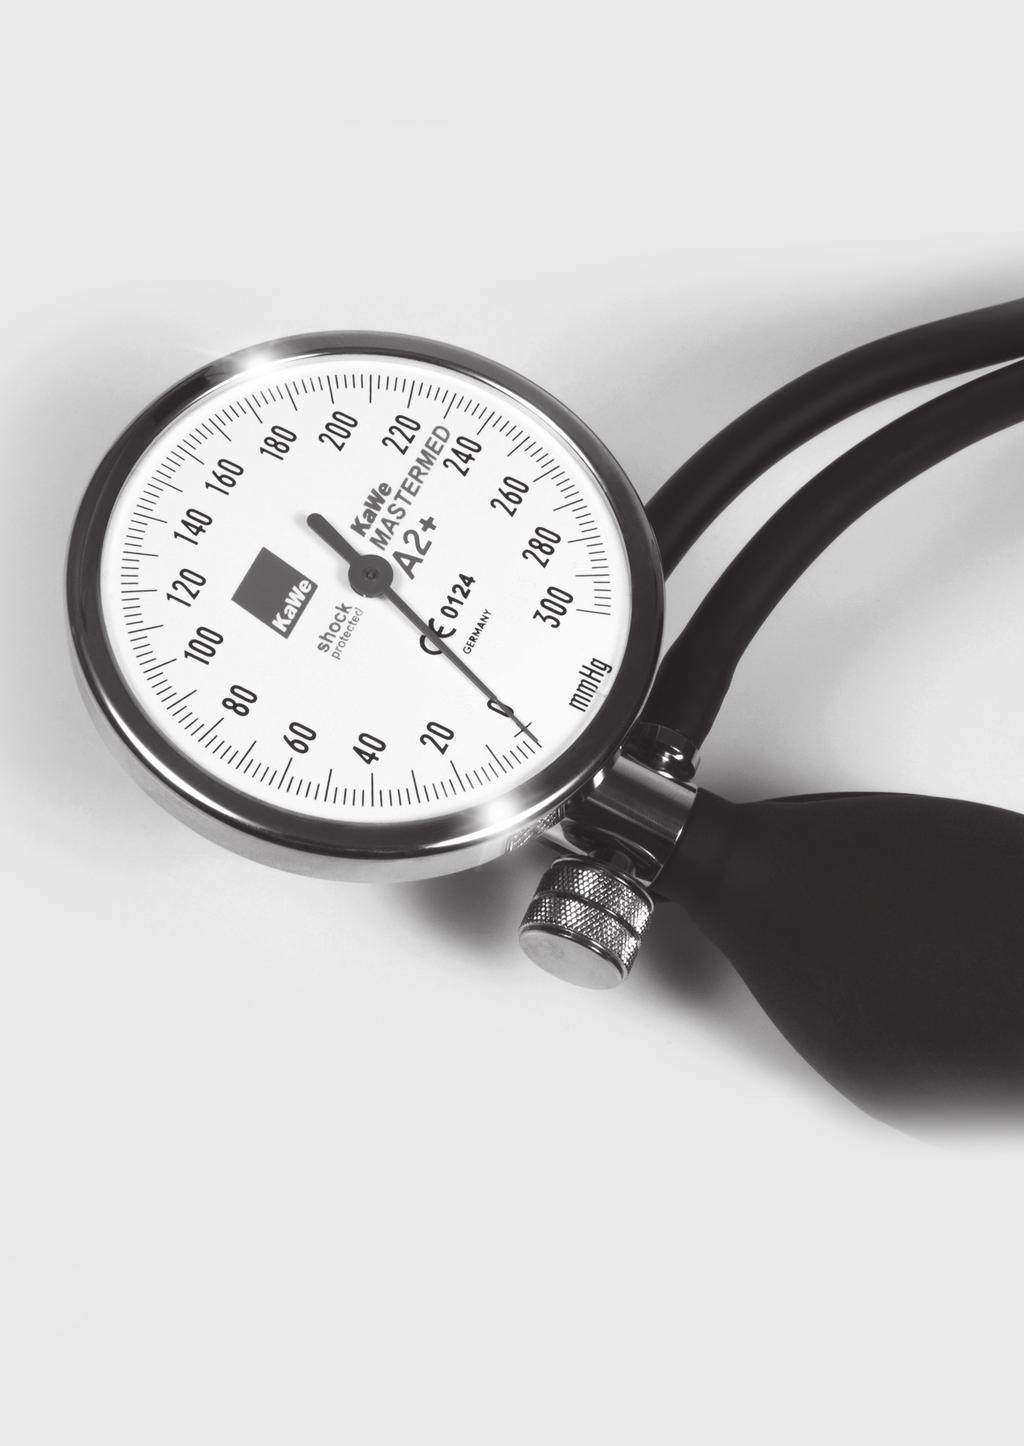 Blutdruckmessgeräte Blood Pressure Measuring Devices Manometer Made in Germany stoßfest nach DIN EN ISO 81060-1 überdrucksicher Skala Ø 60 mm Manometer Made in Germany shock protected in accordance